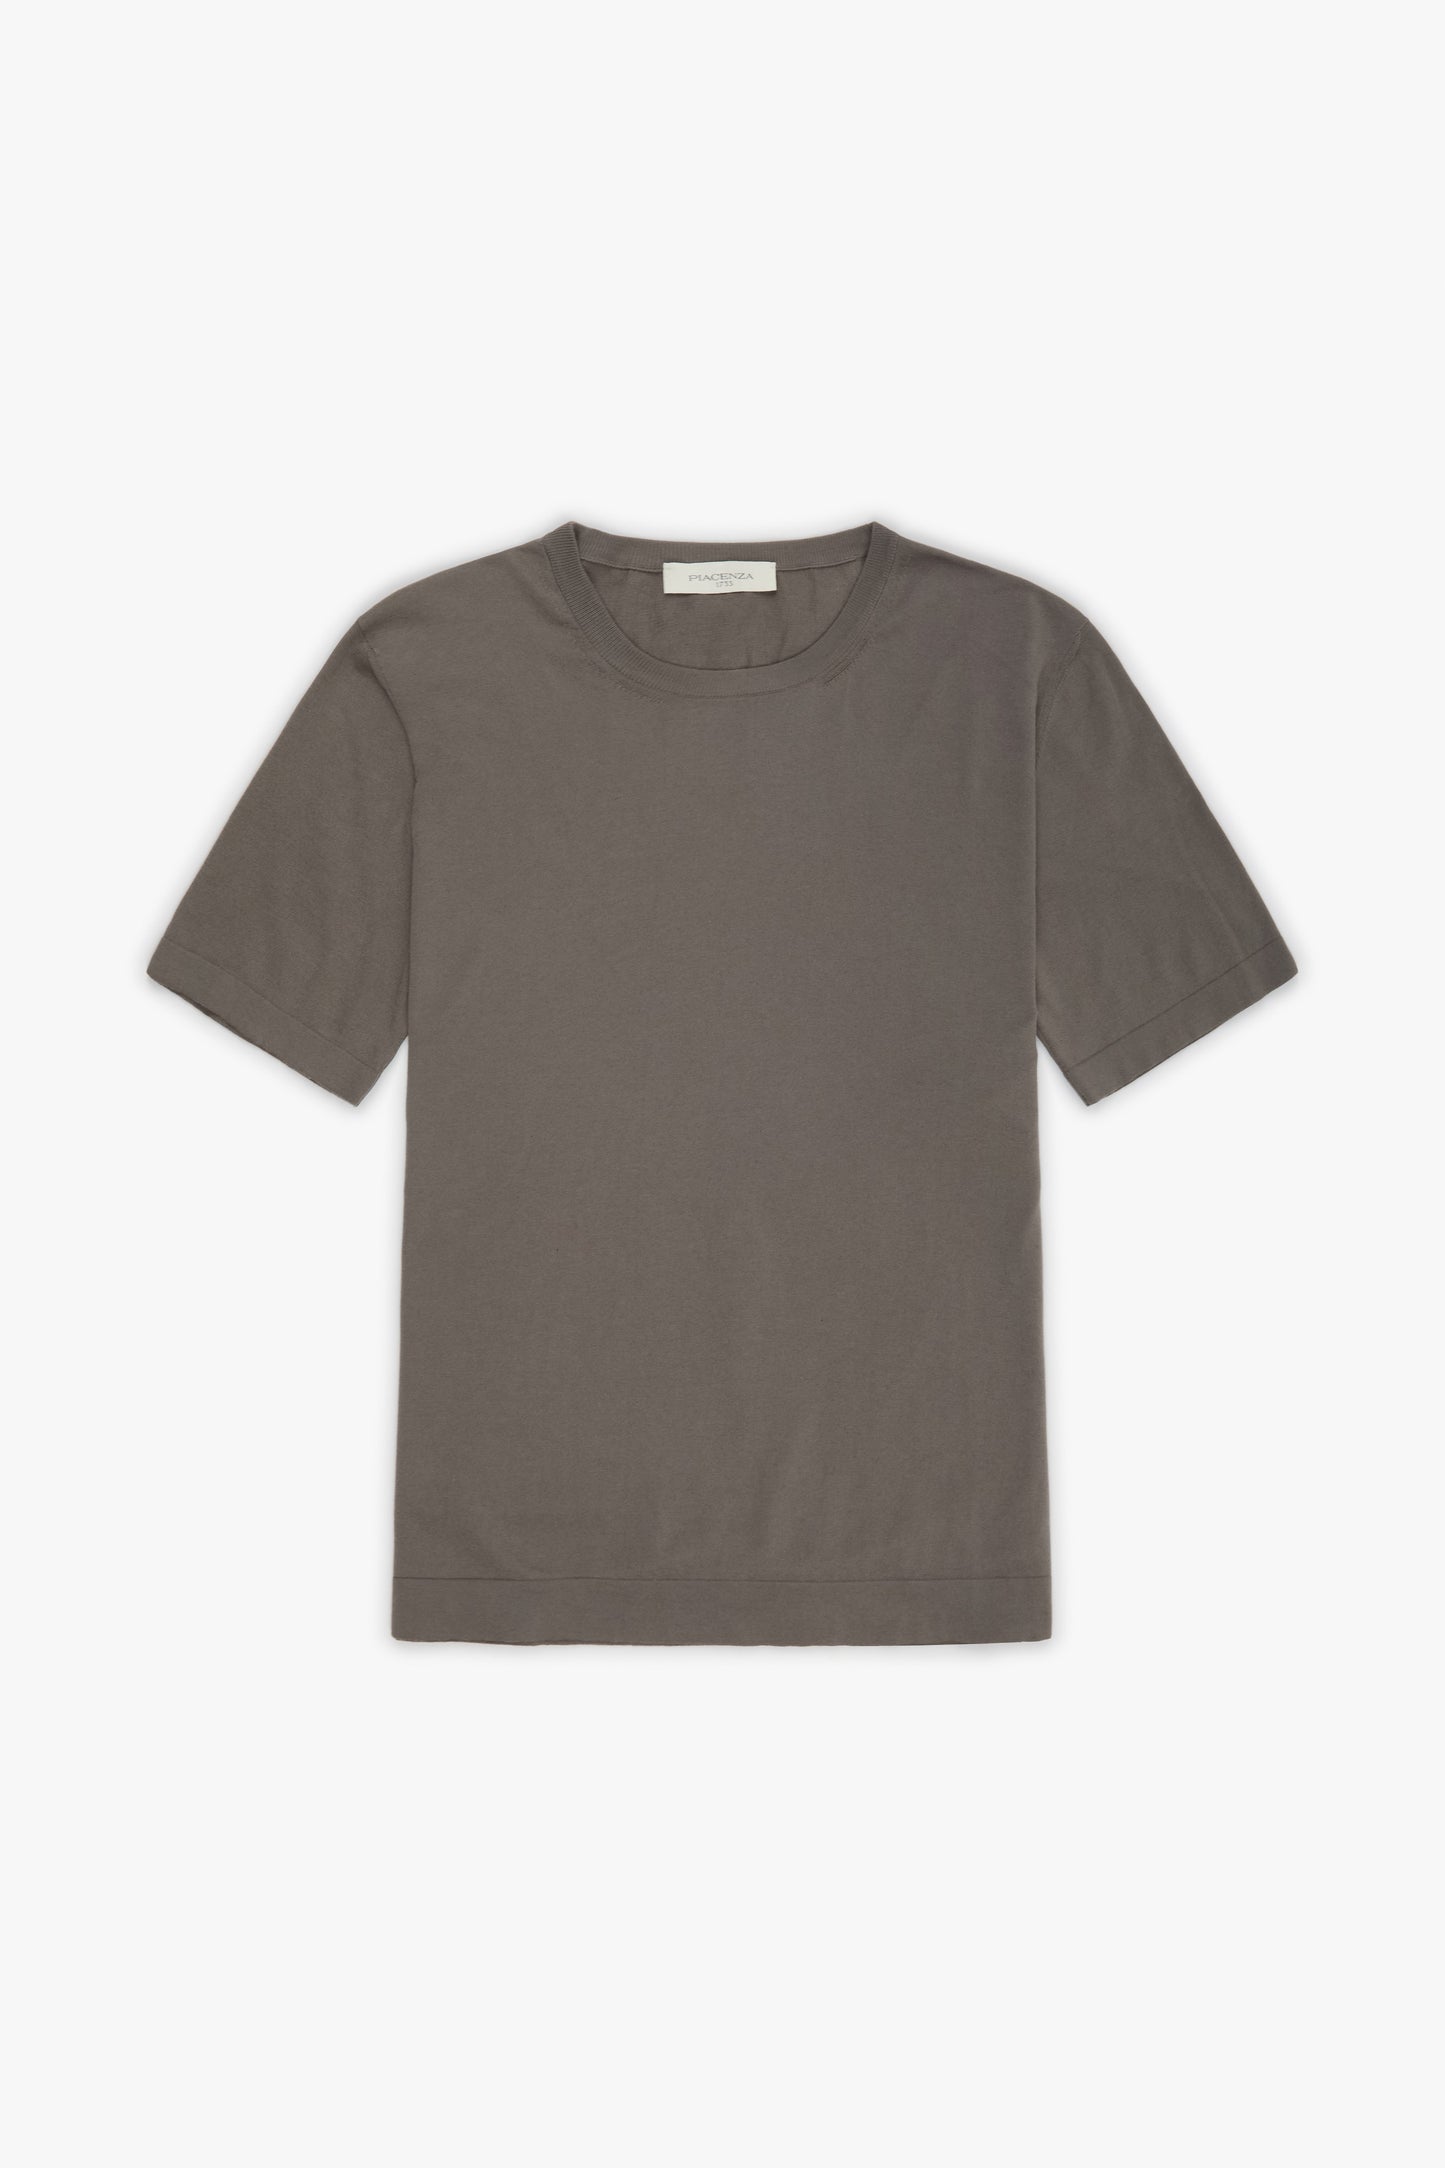 Dark gray short sleeve shirt